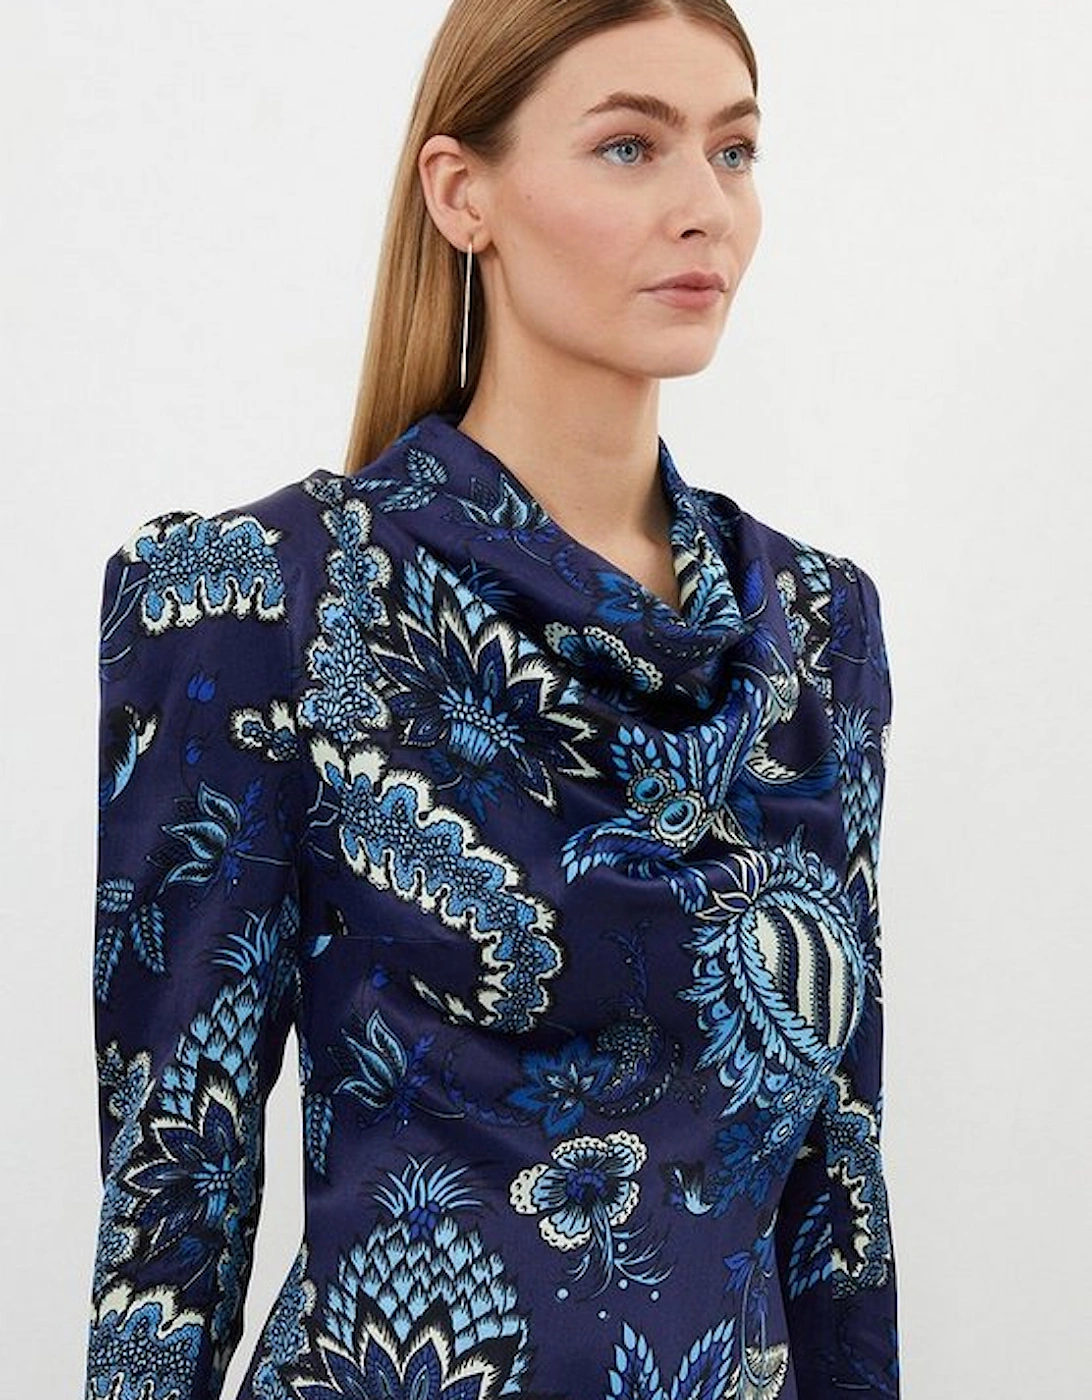 Floral Print Viscose Satin Asymmetric Woven Maxi Dress